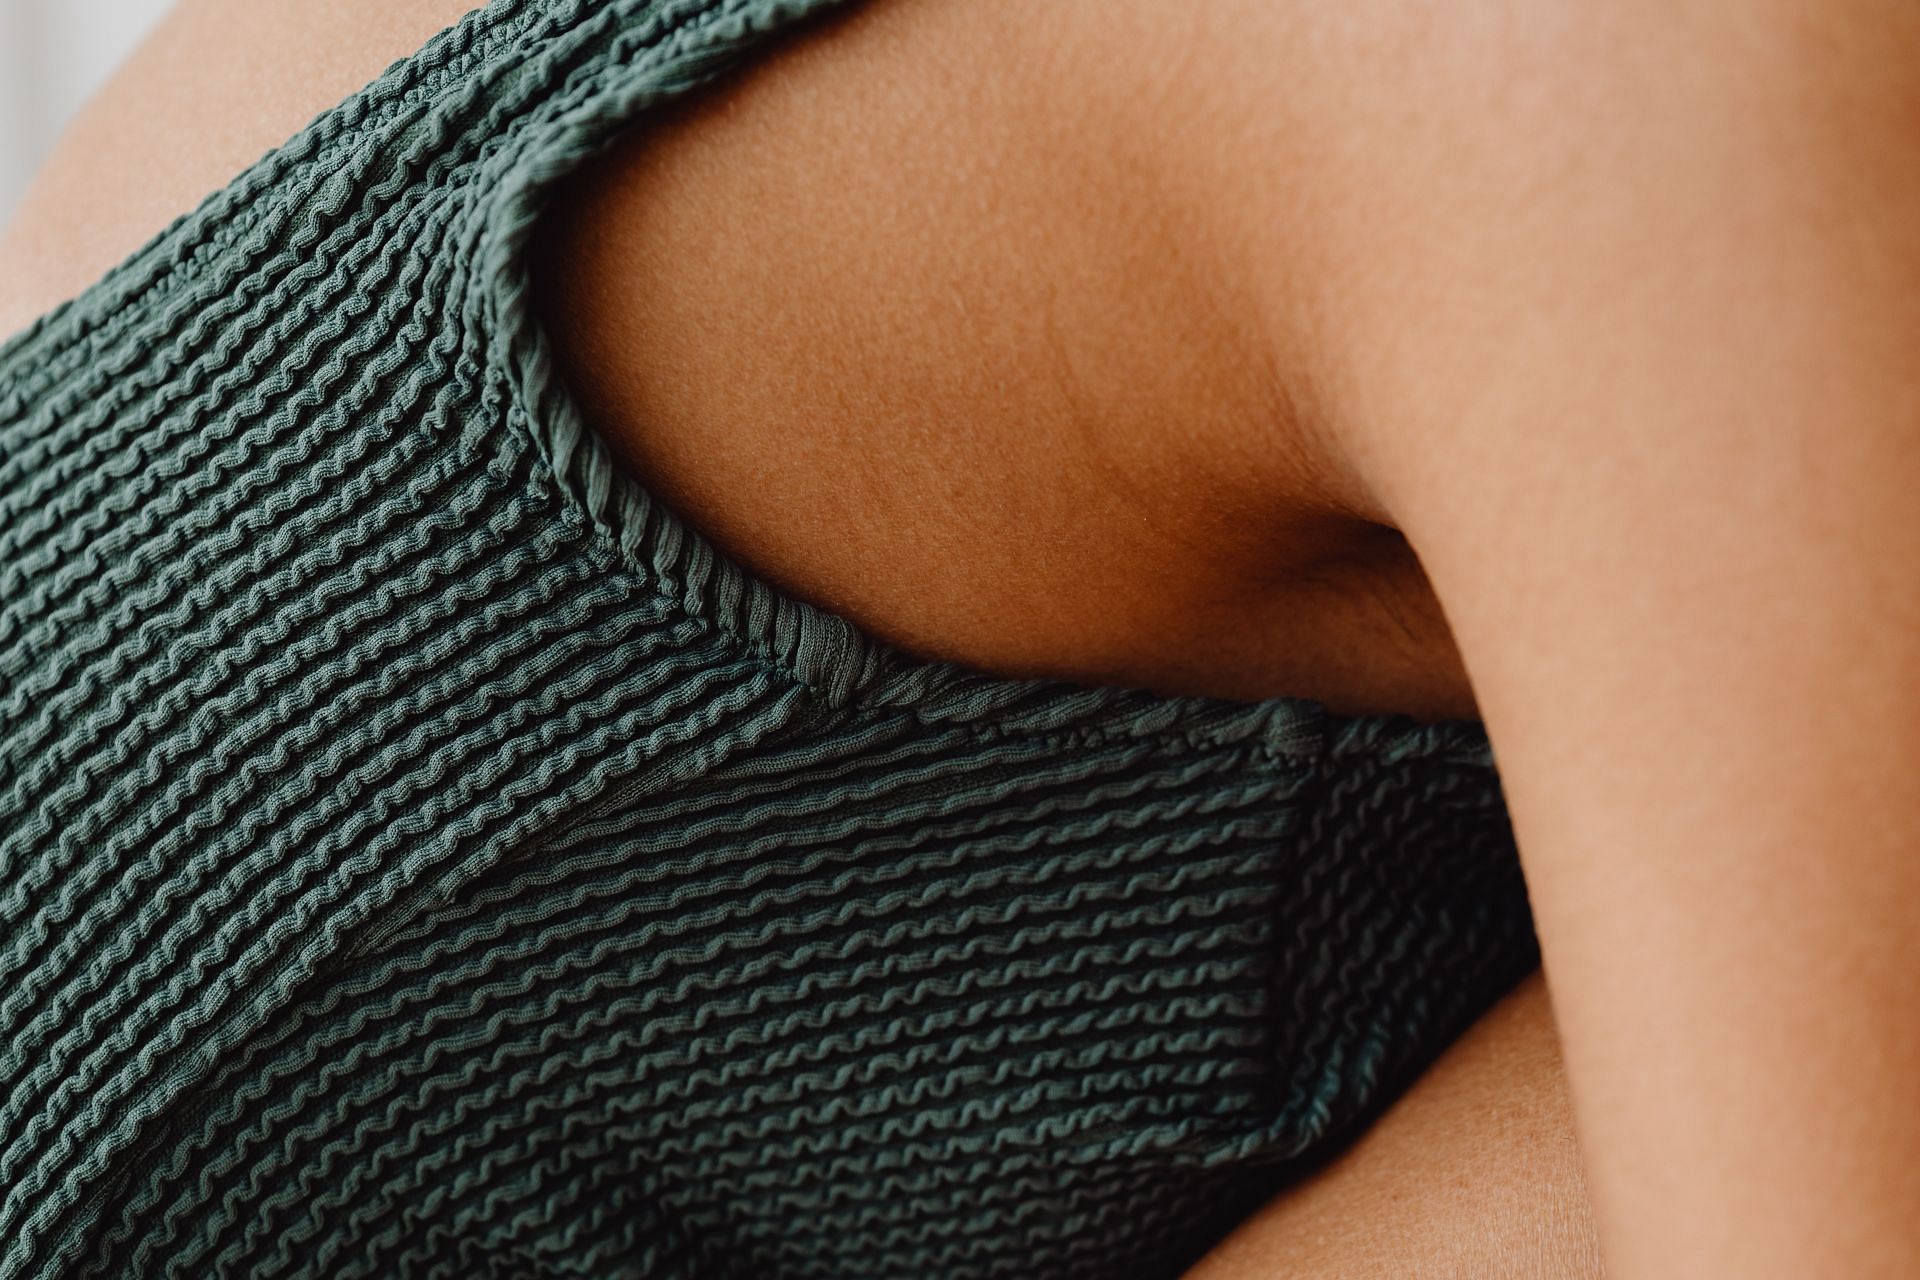 How to prevent armpit rash? (image via pexels / karolina grabowska)